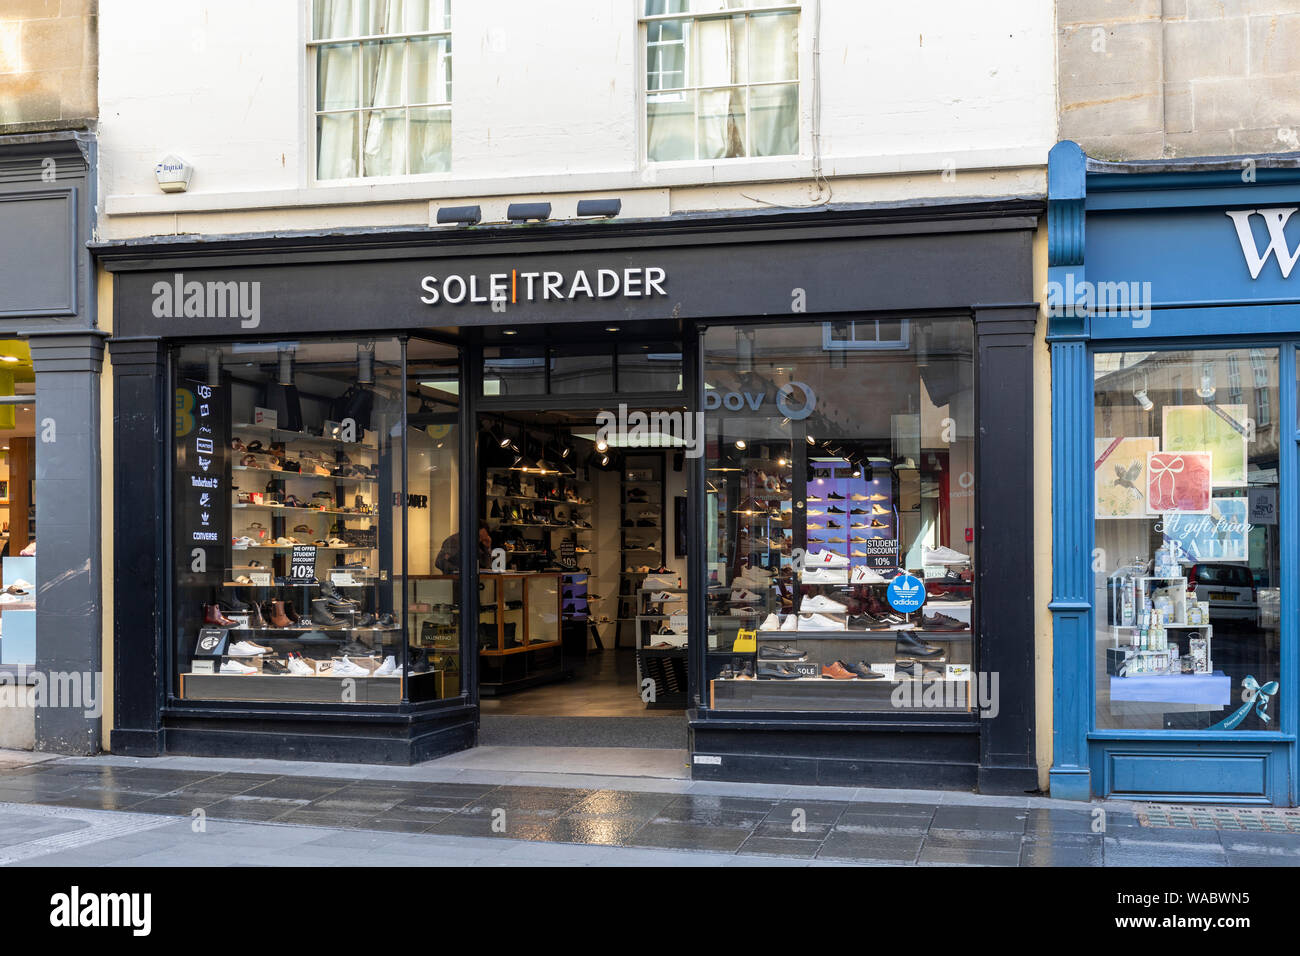 Soletrader - Shoe store, Stall Street, Bath, UK Stock Photo